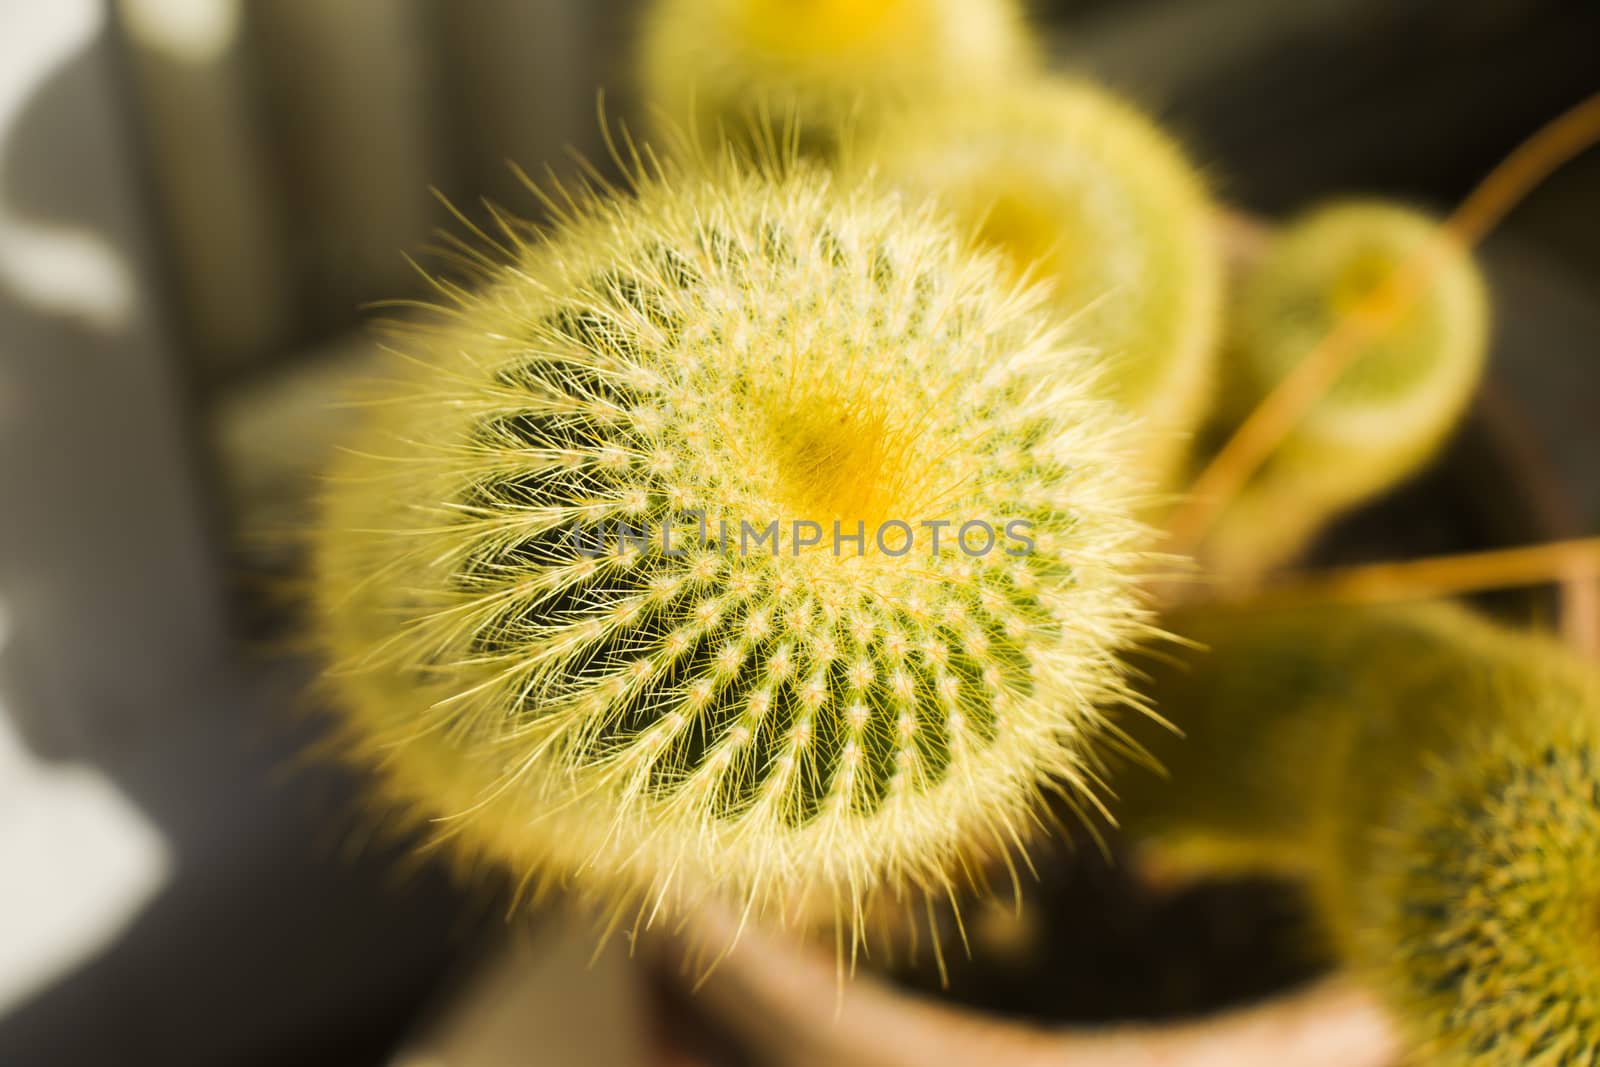 Cactus close-up and macro, yellow cactus by Taidundua